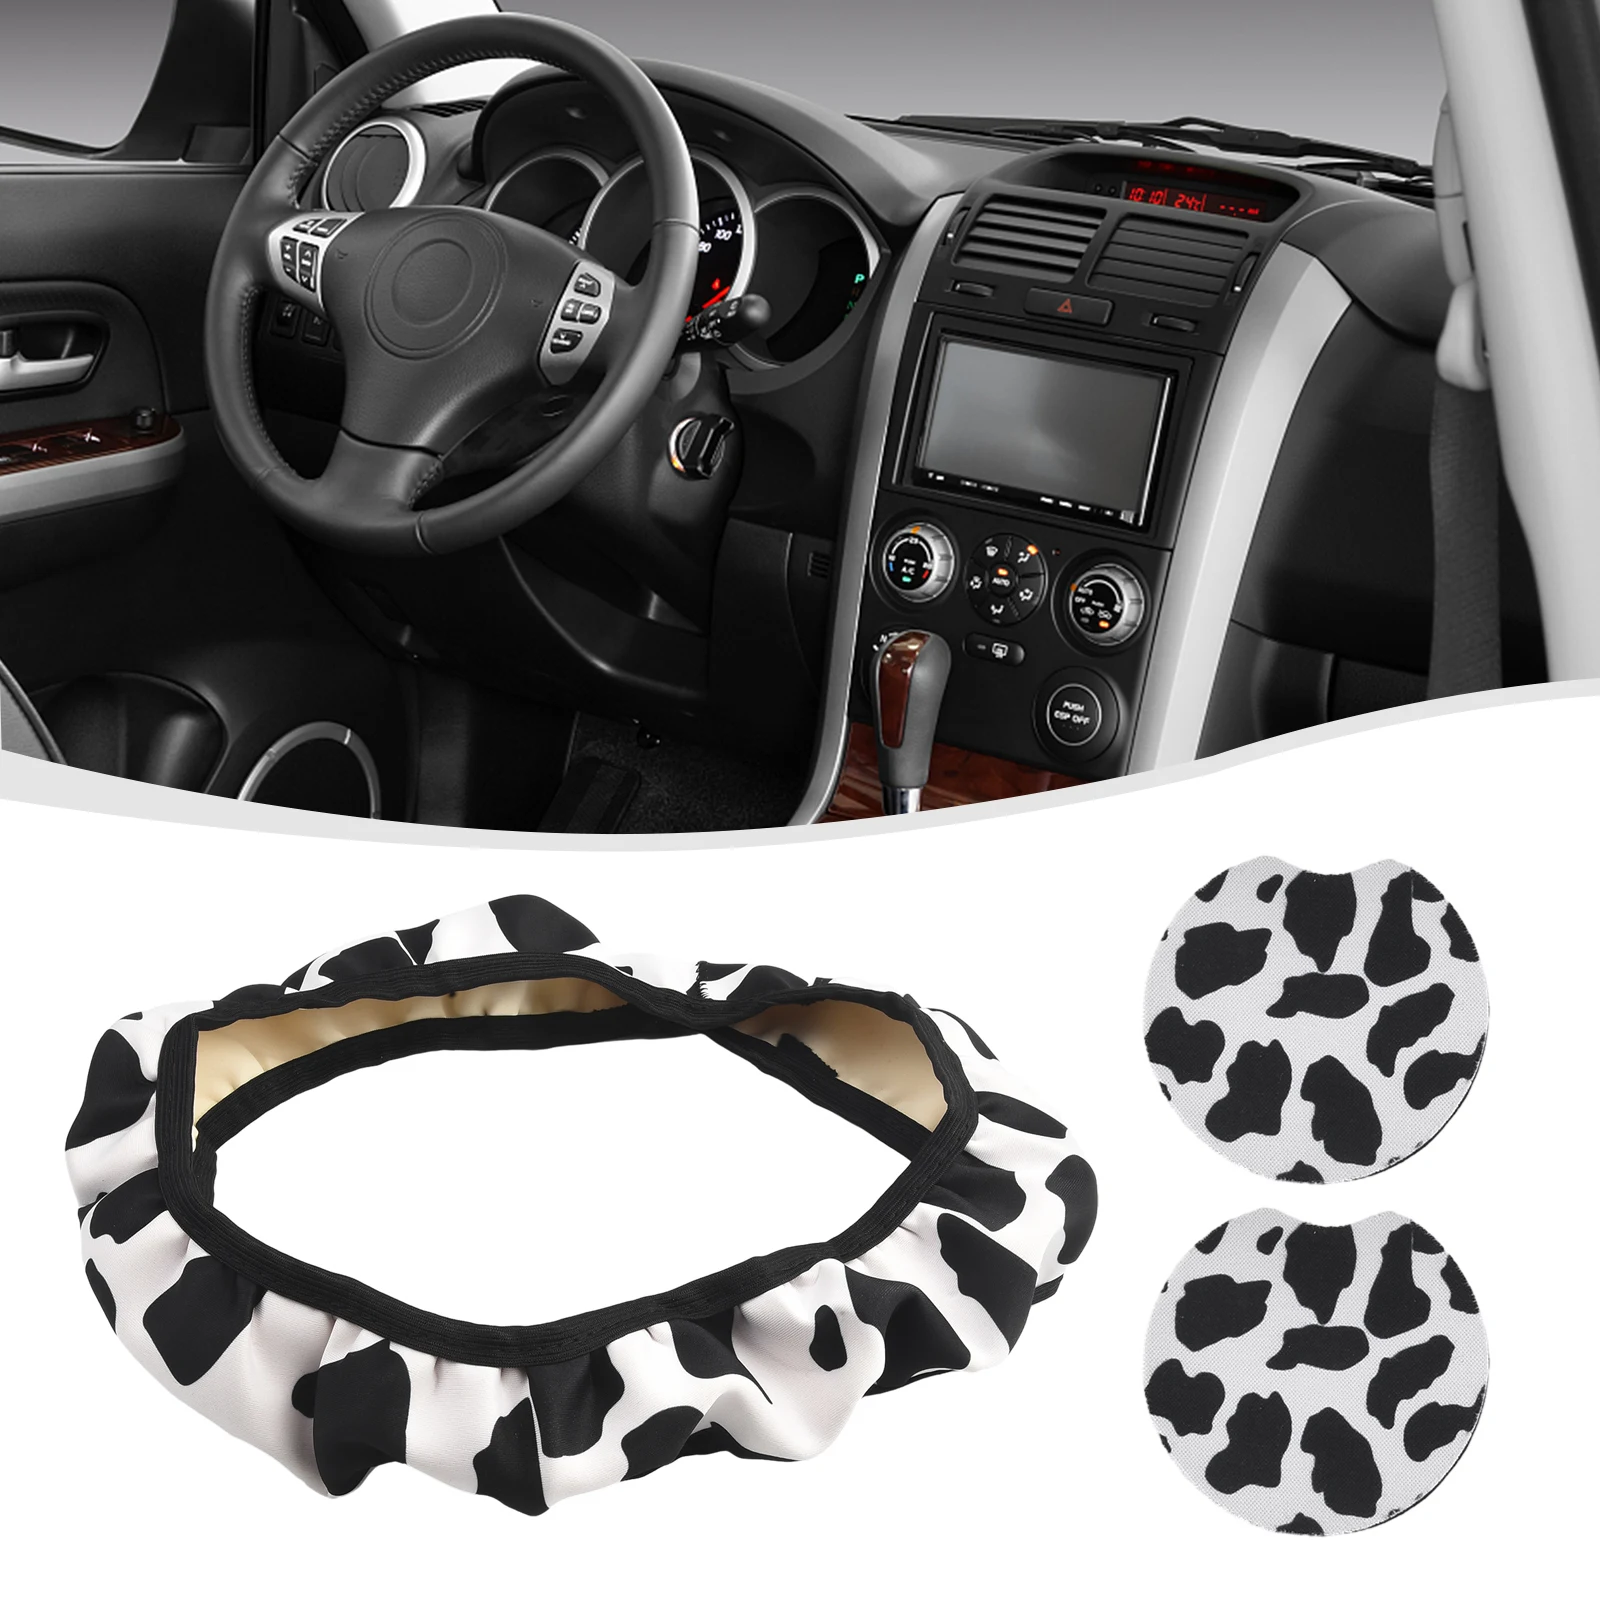 

3PCS Car Universal Cute Cow Print Car Steering Wheel Cover + Coaster Non-Slip Kit Interior Accessories